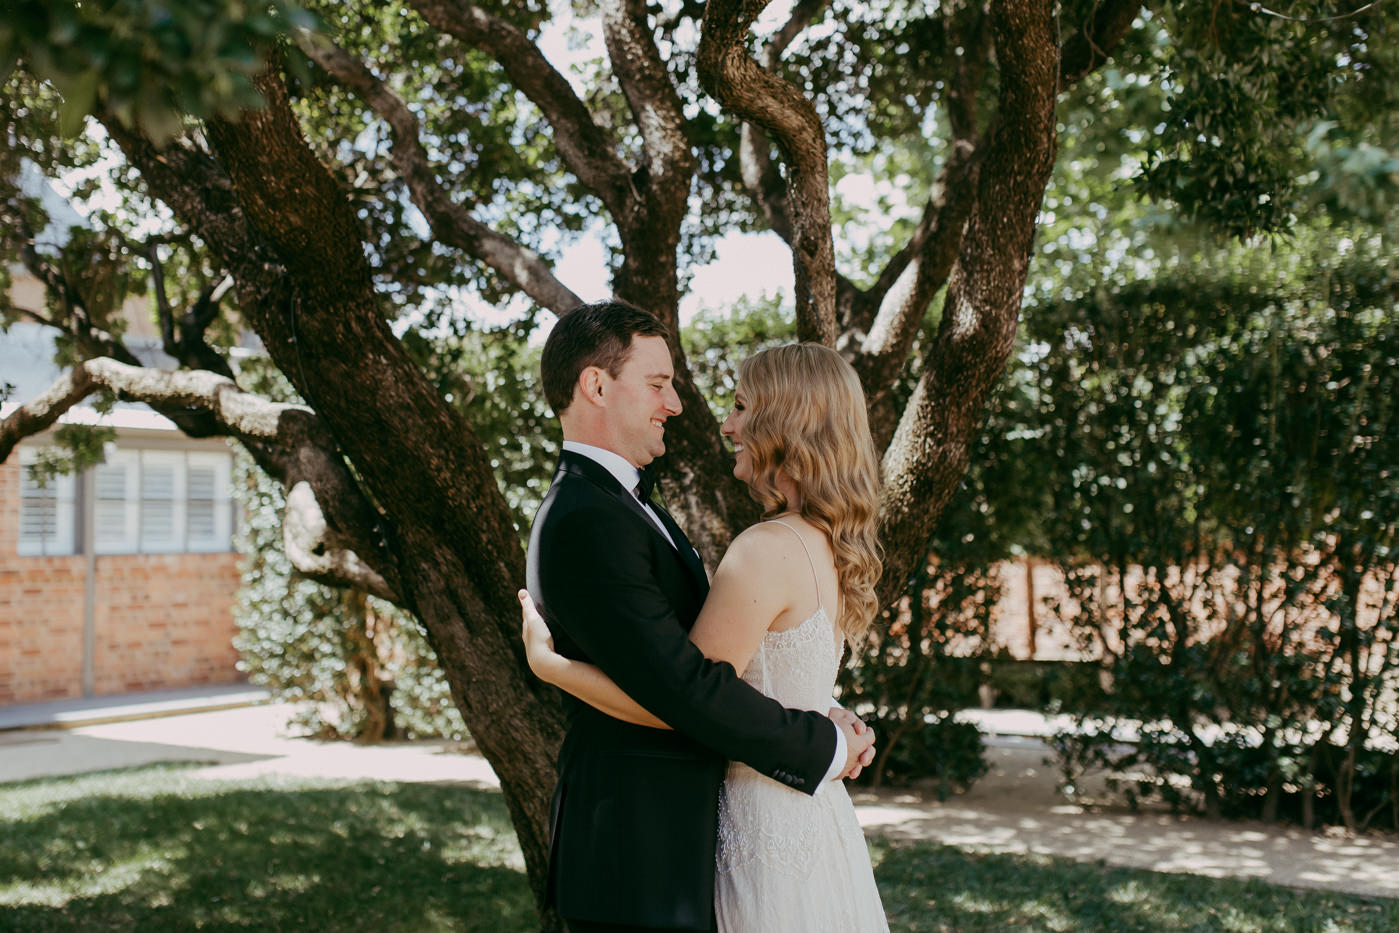 Anthony & Eliet - Wagga Wagga Wedding - Country NSW - Samantha Heather Photography-41.jpg